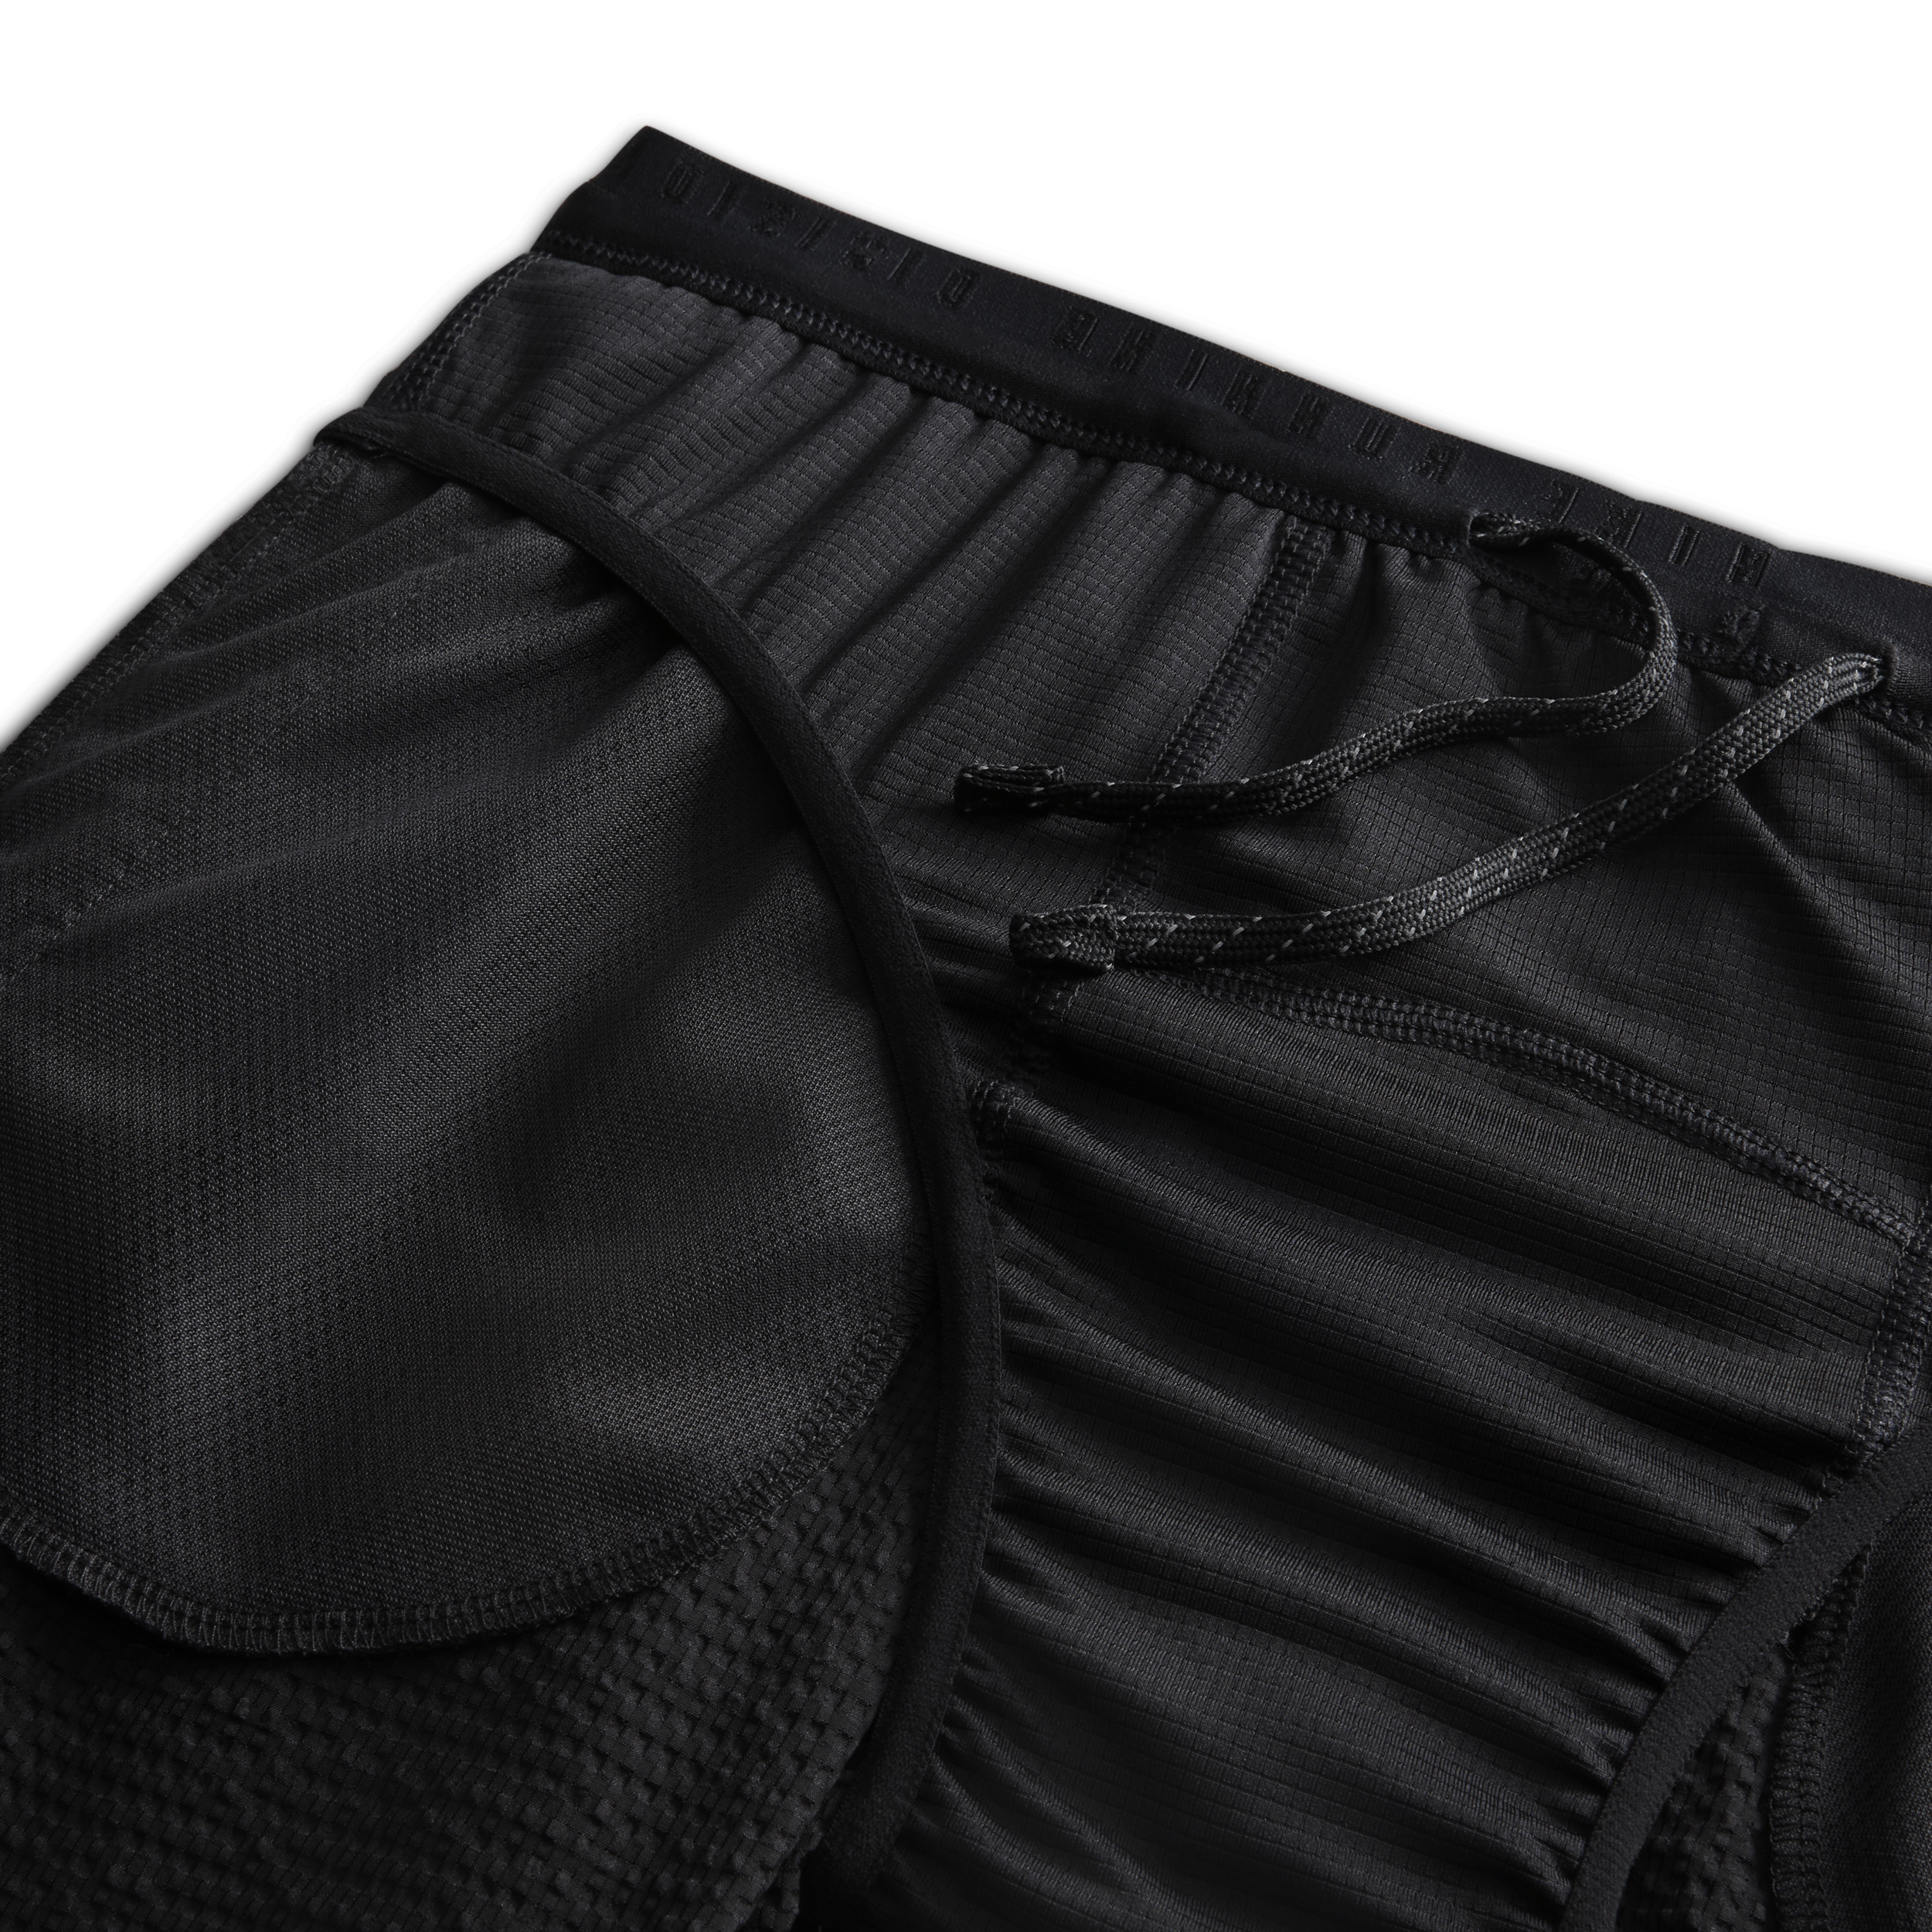 Nike Running Division Dri-FIT ADV hardloopshorts met binnenbroek voor heren (10 cm) Zwart